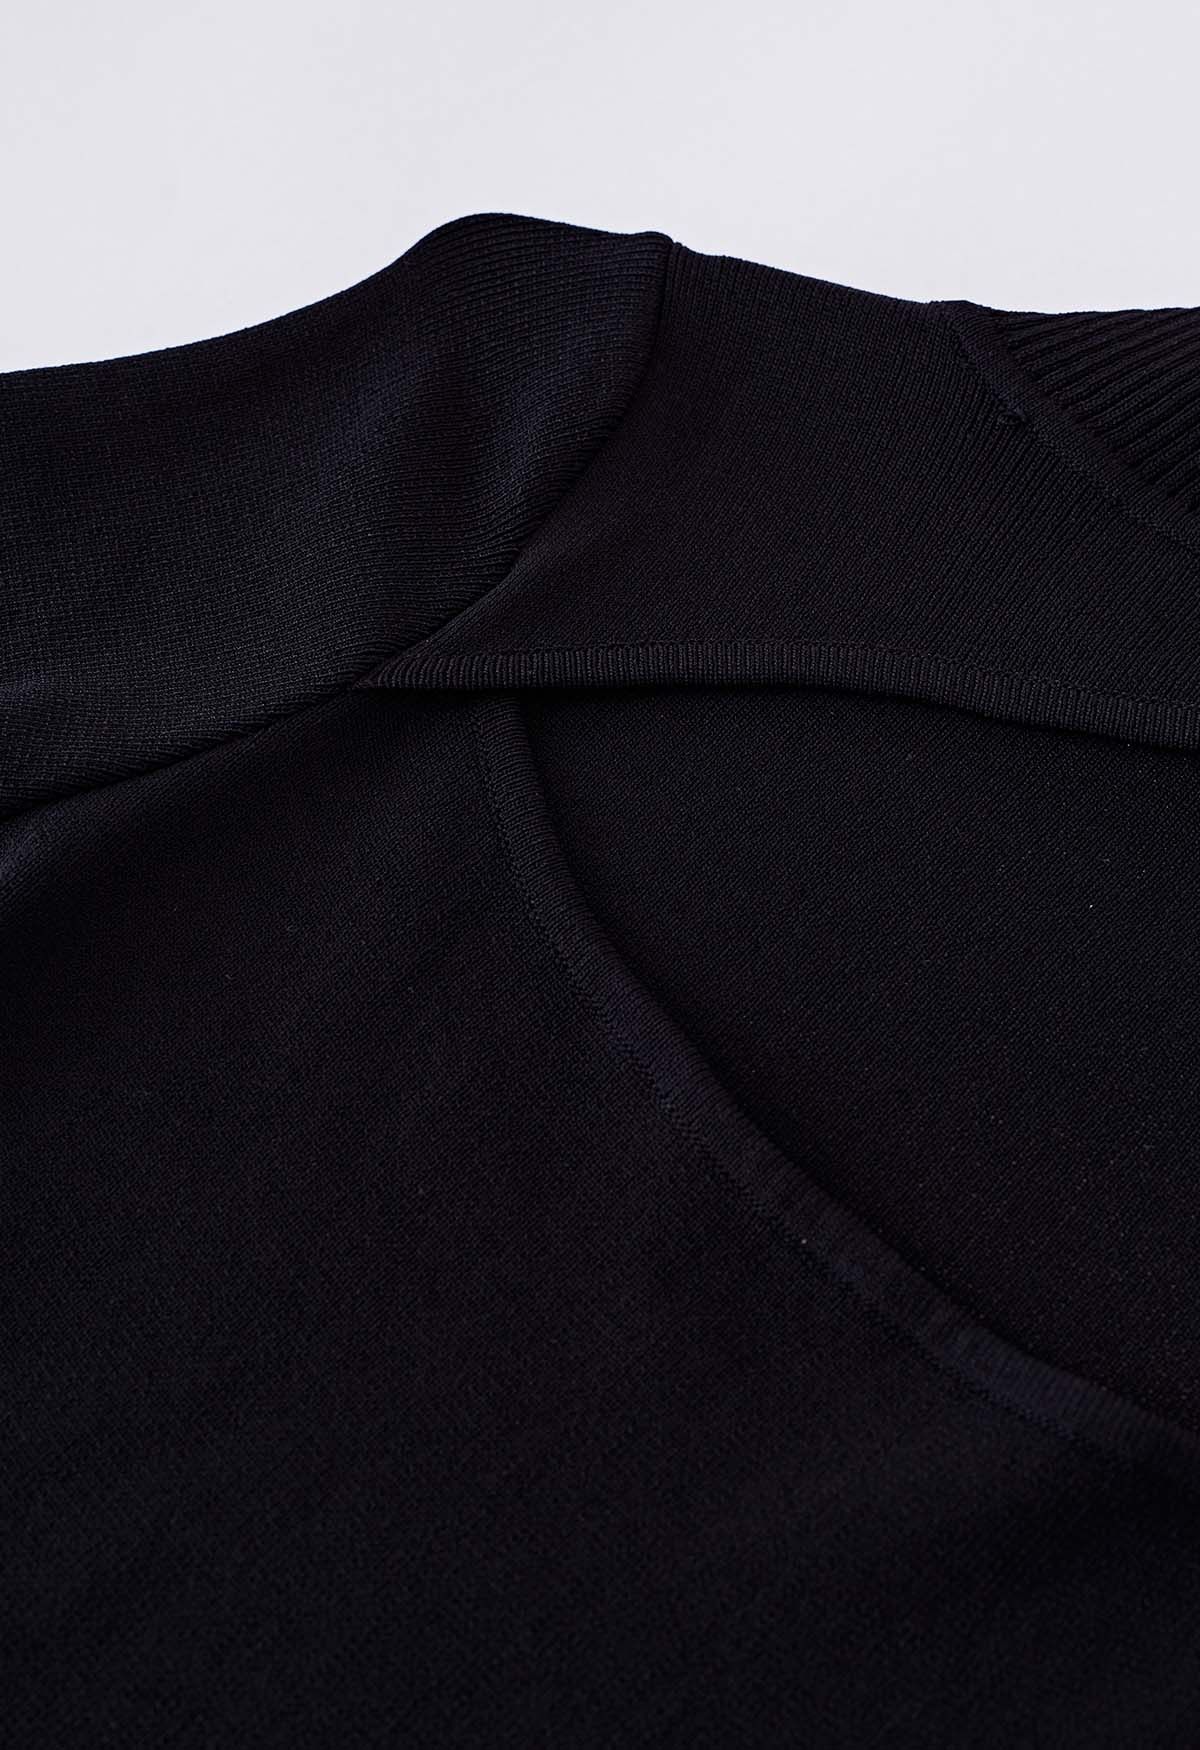 Cutout Neckline Bodycon Knit Dress in Black